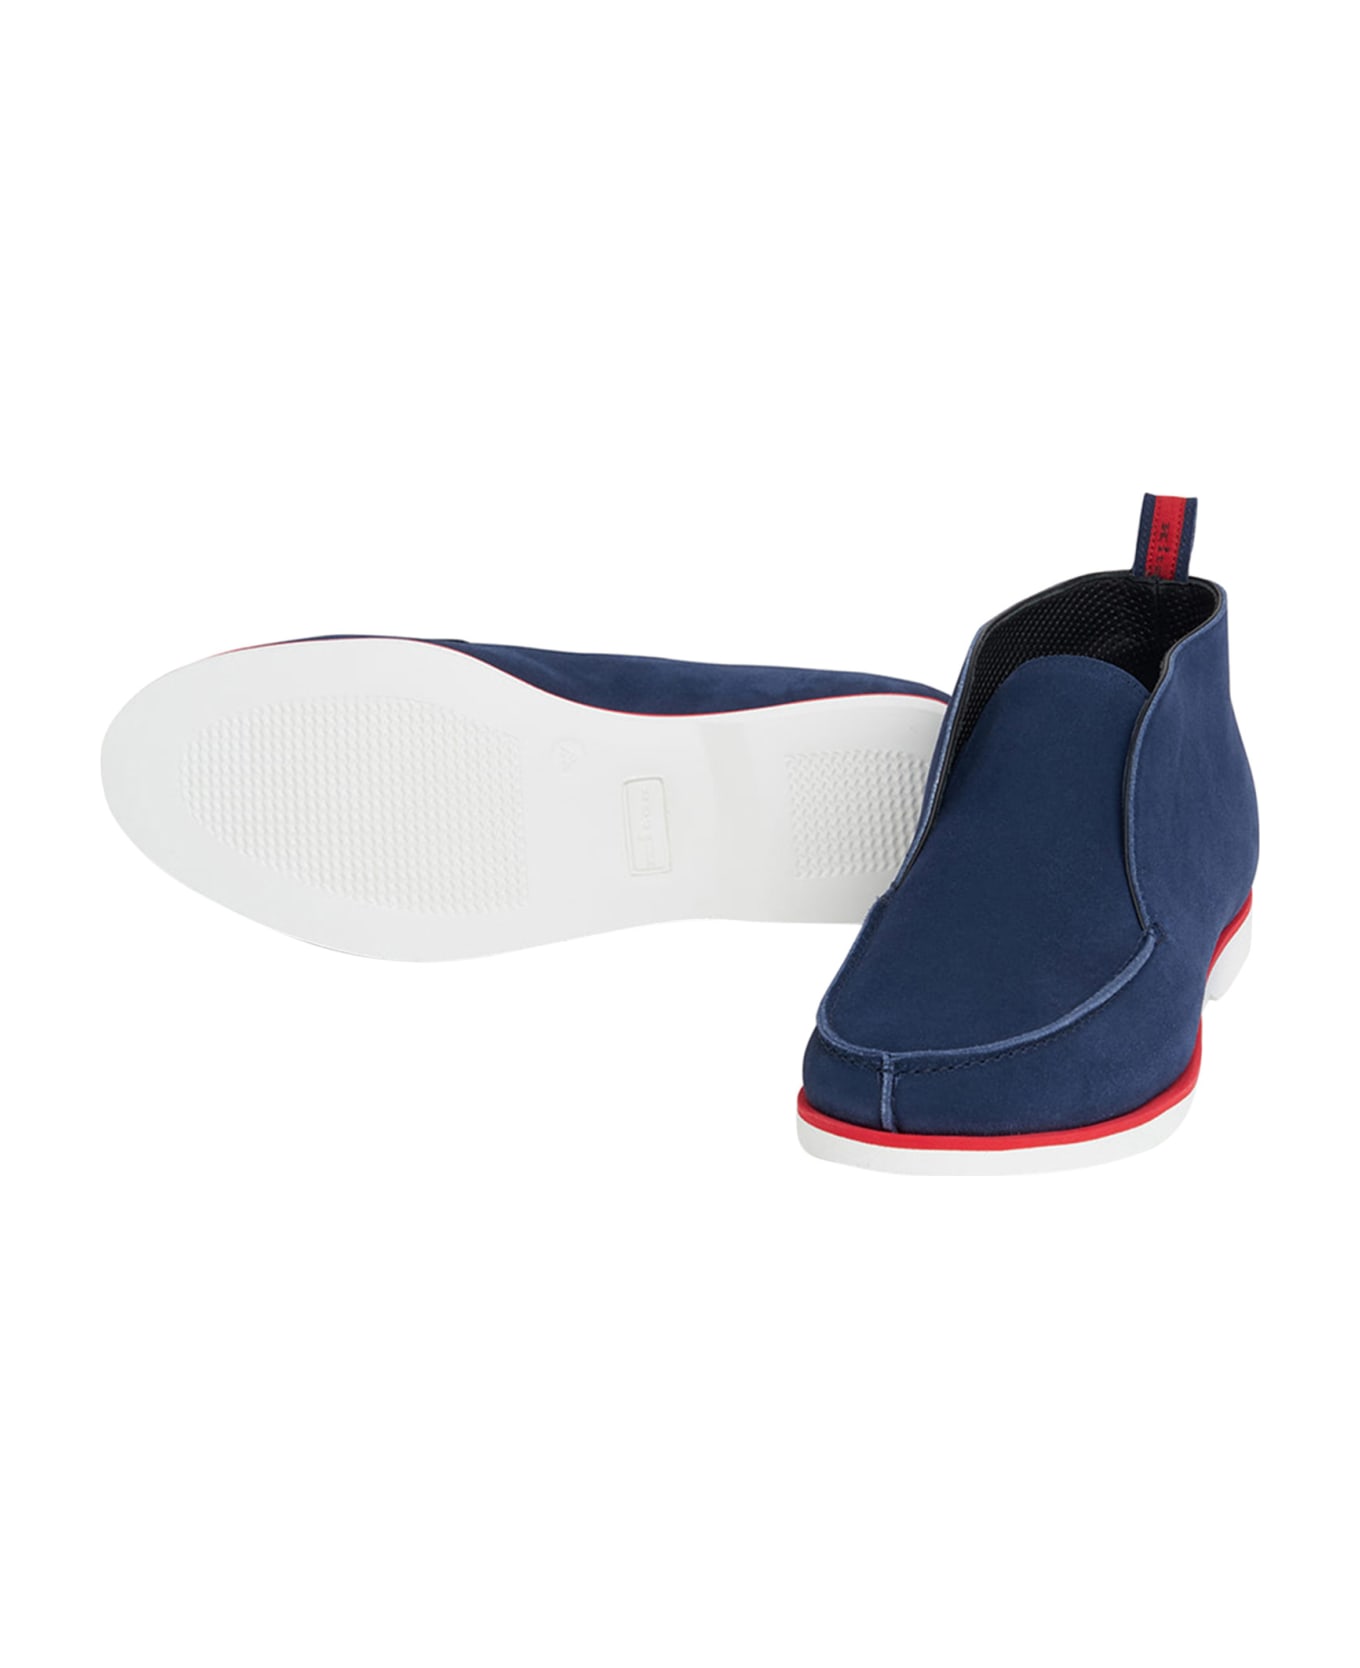 Kiton Ankle Shoes Calfskin - ROYAL BLUE